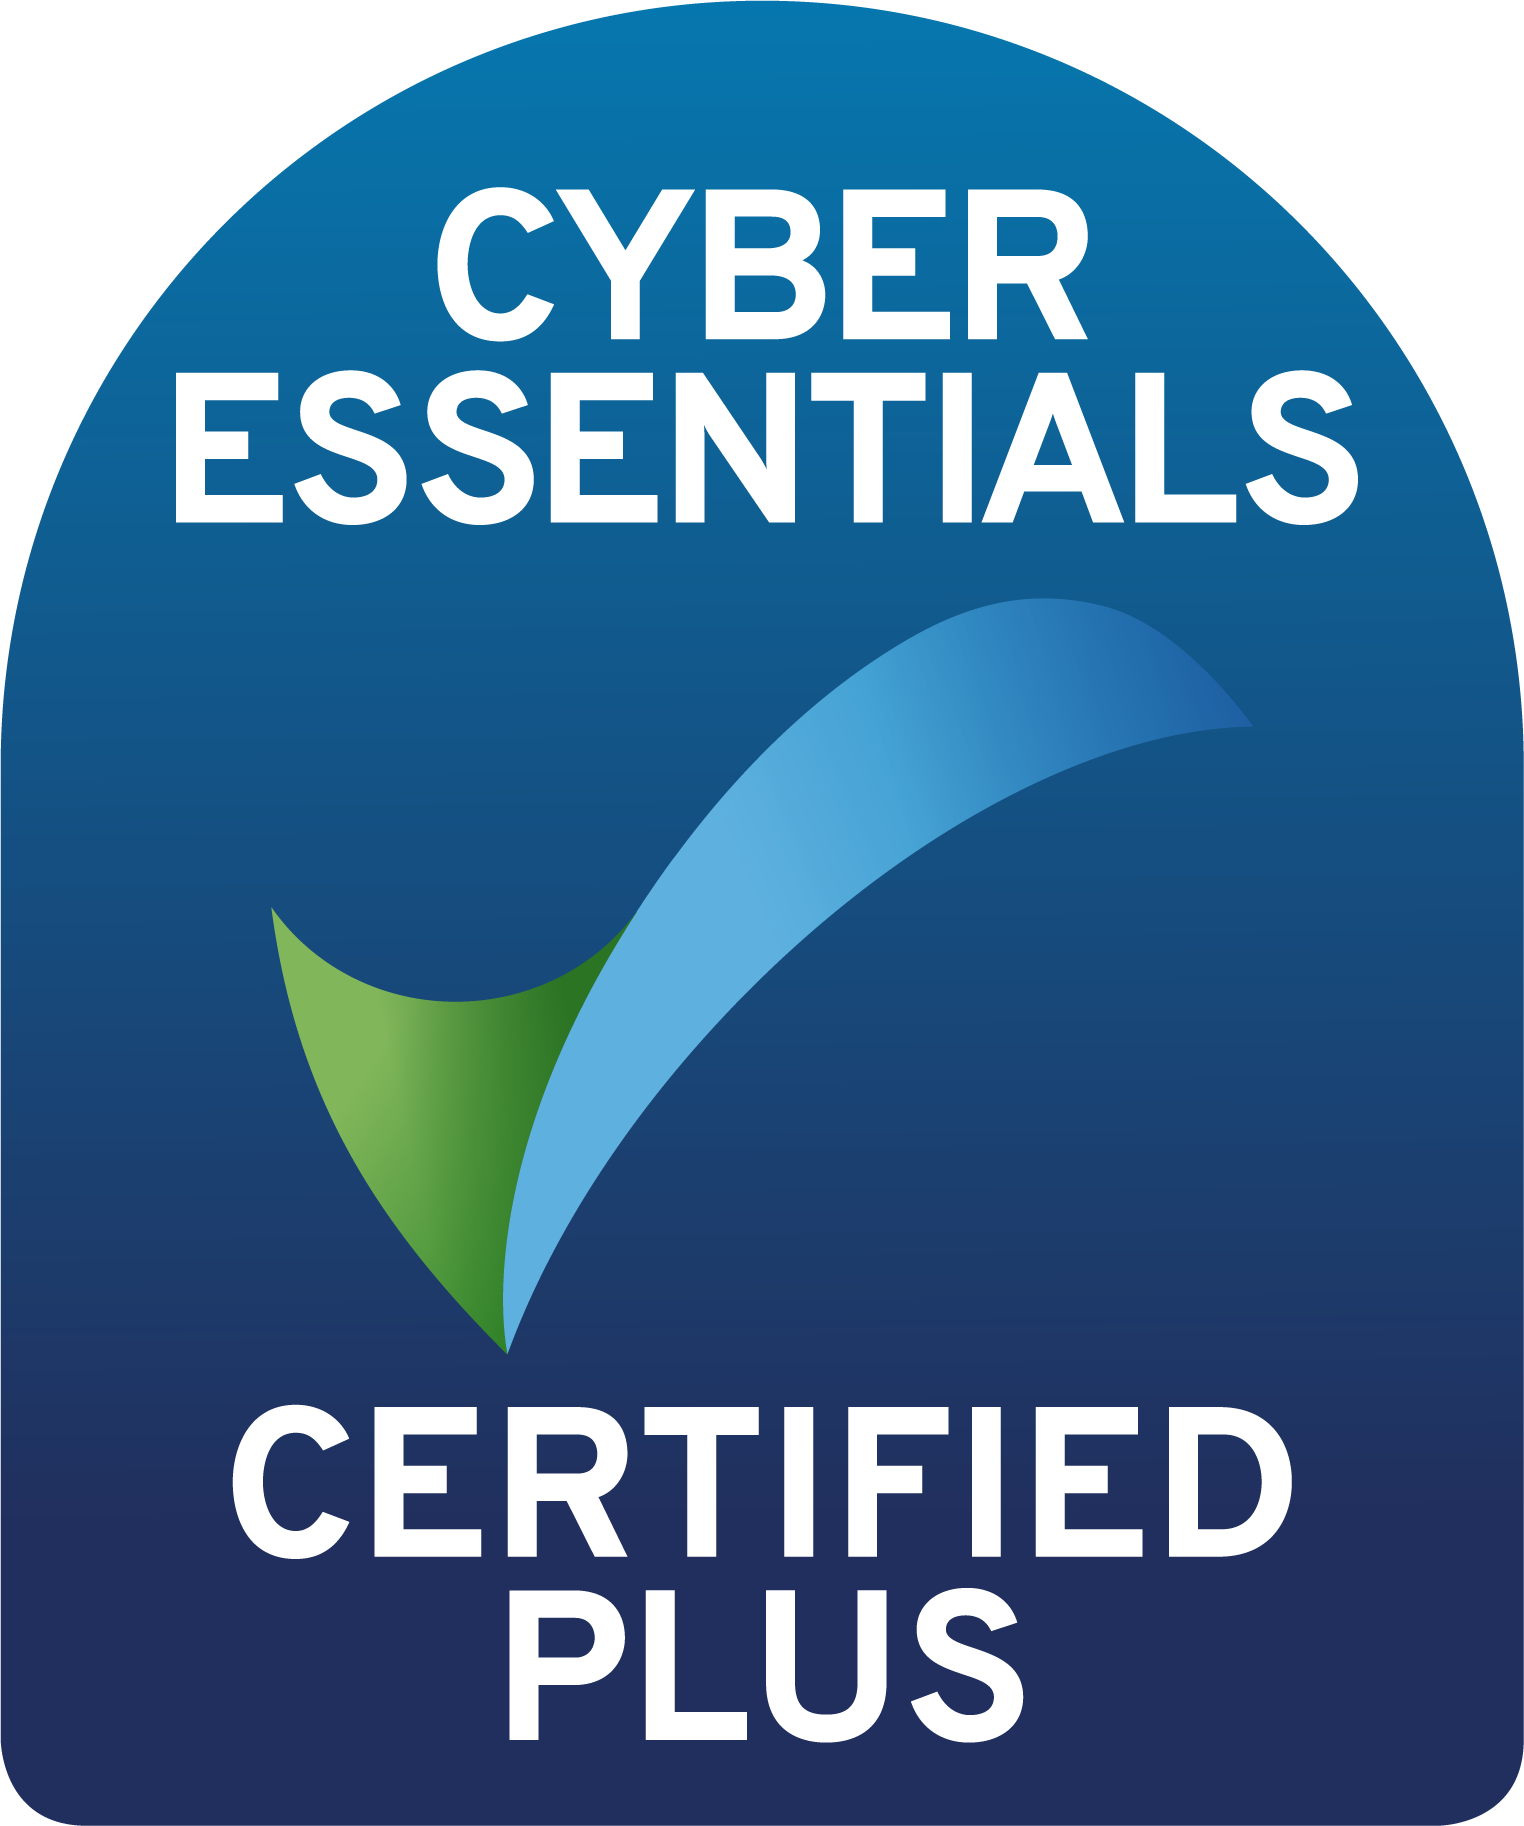 cyber essentials certification plus logo